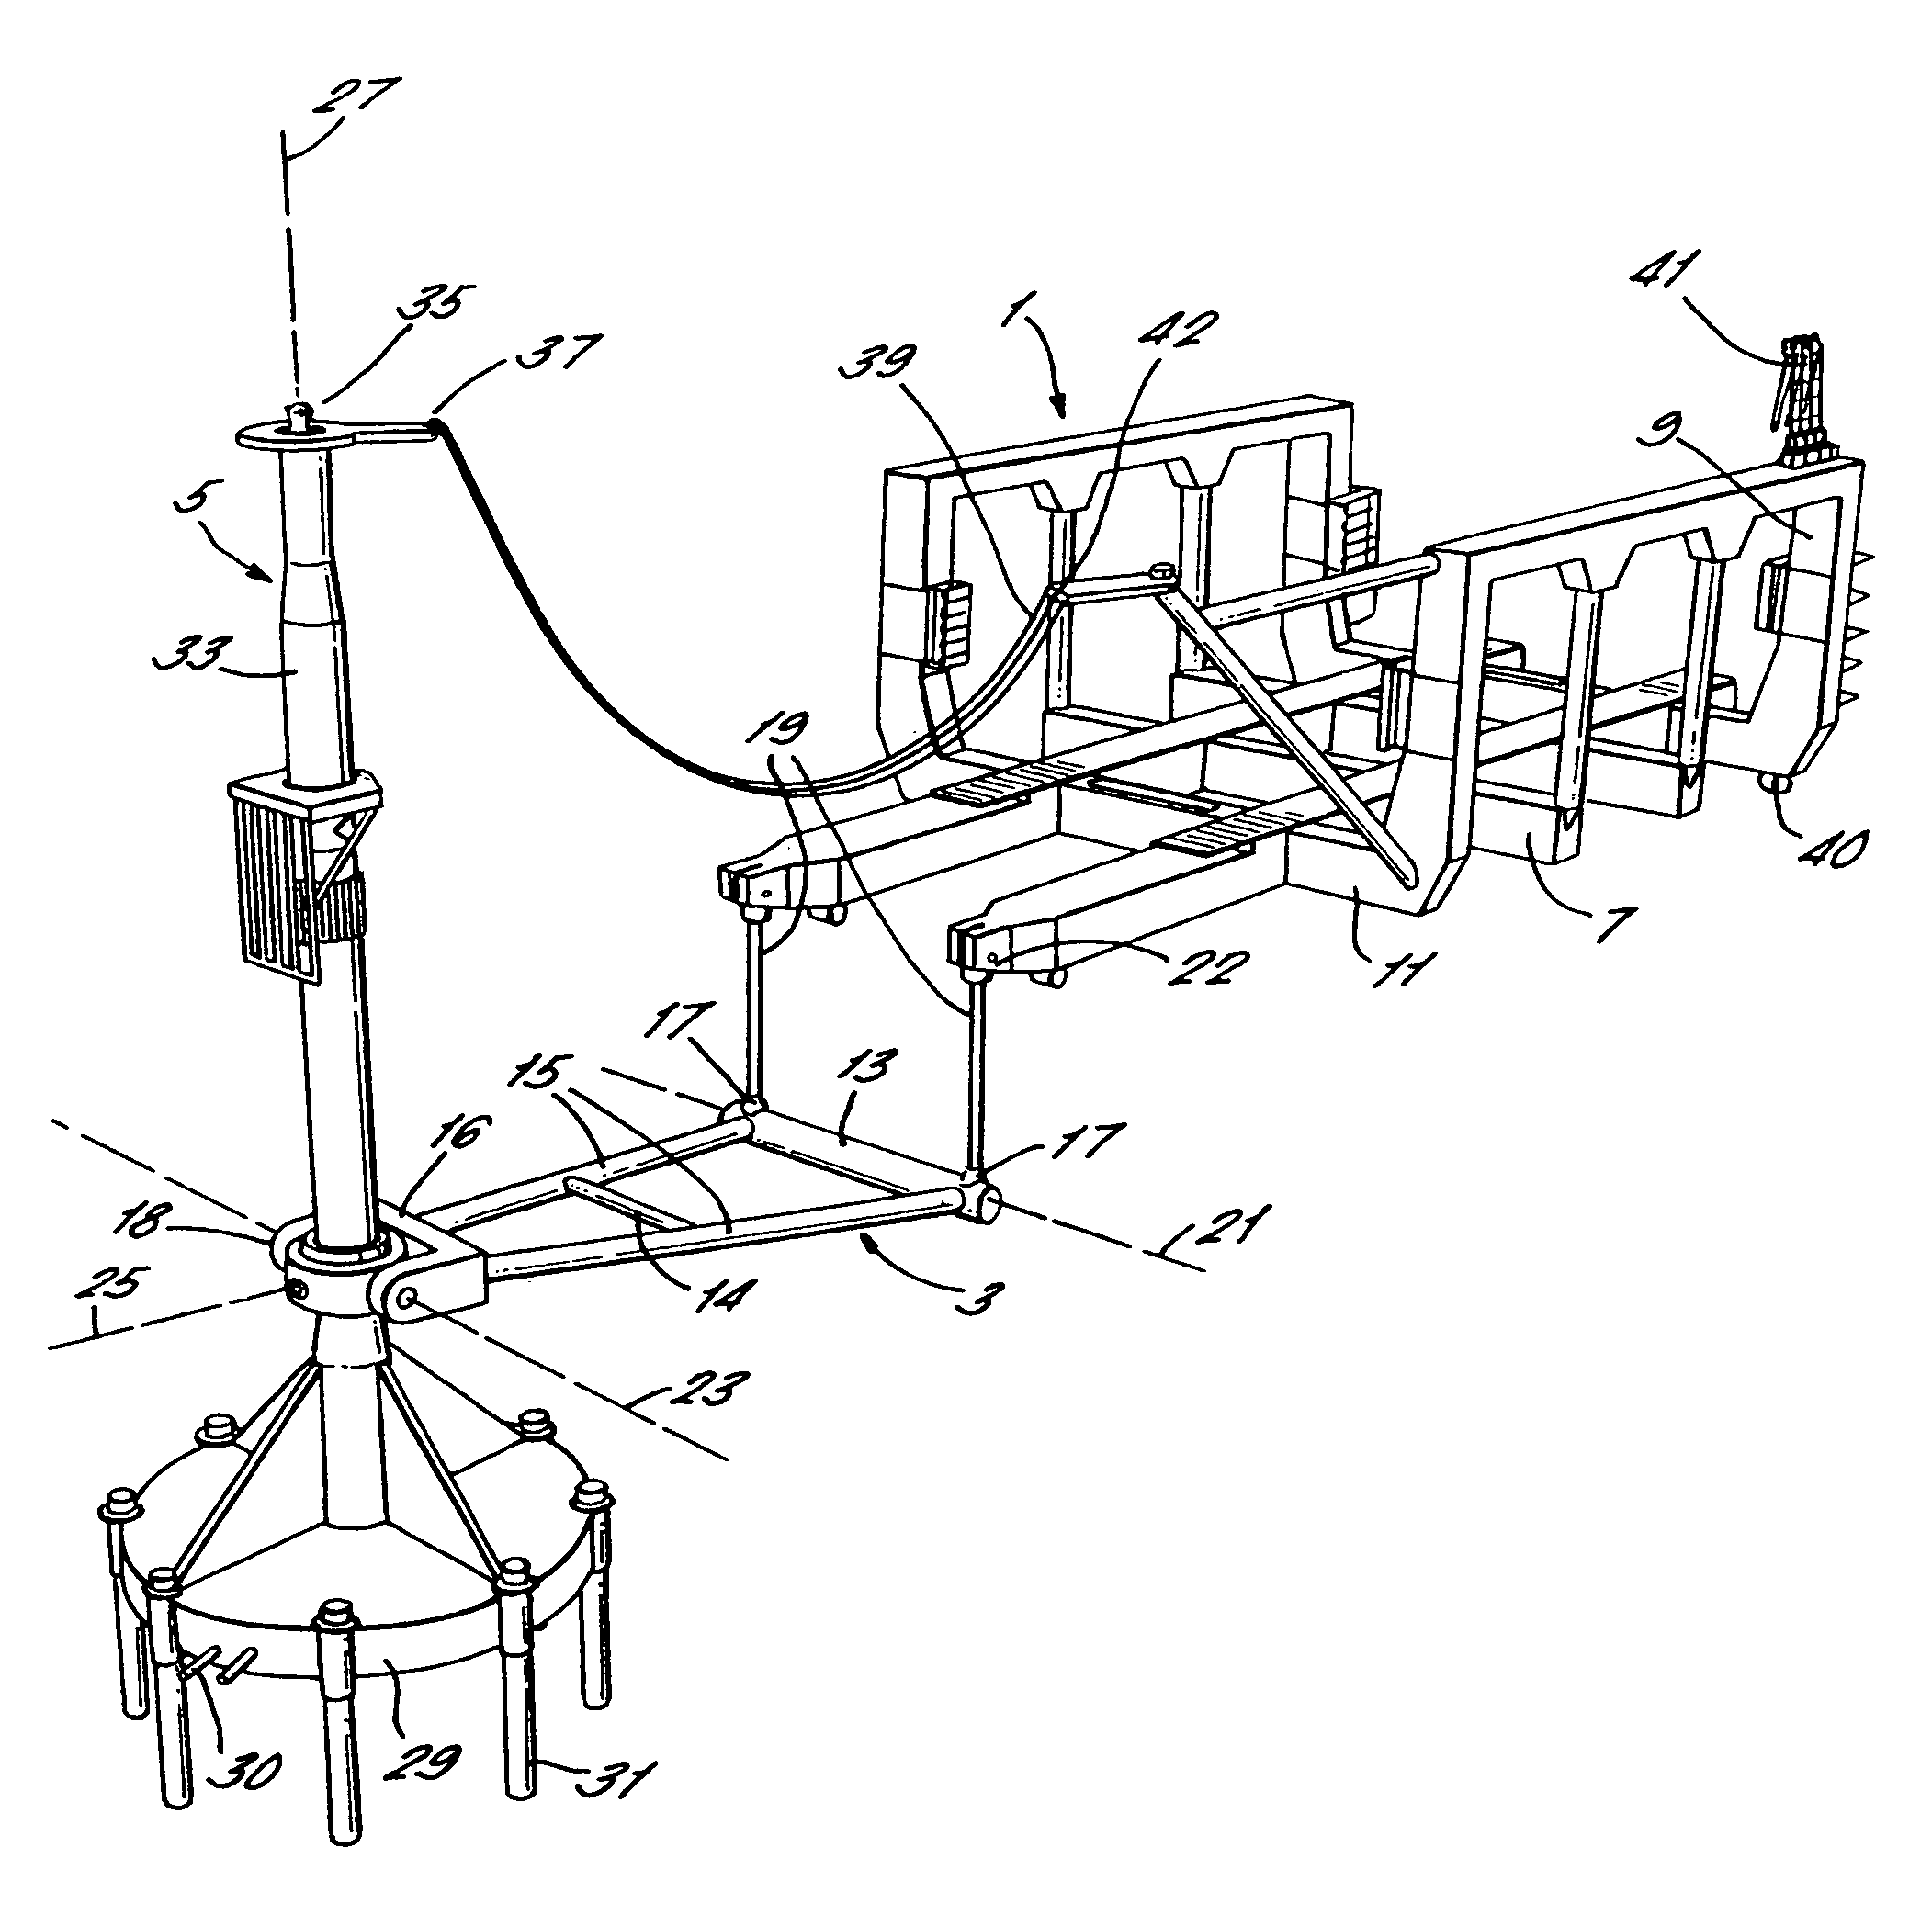 Mooring apparatus